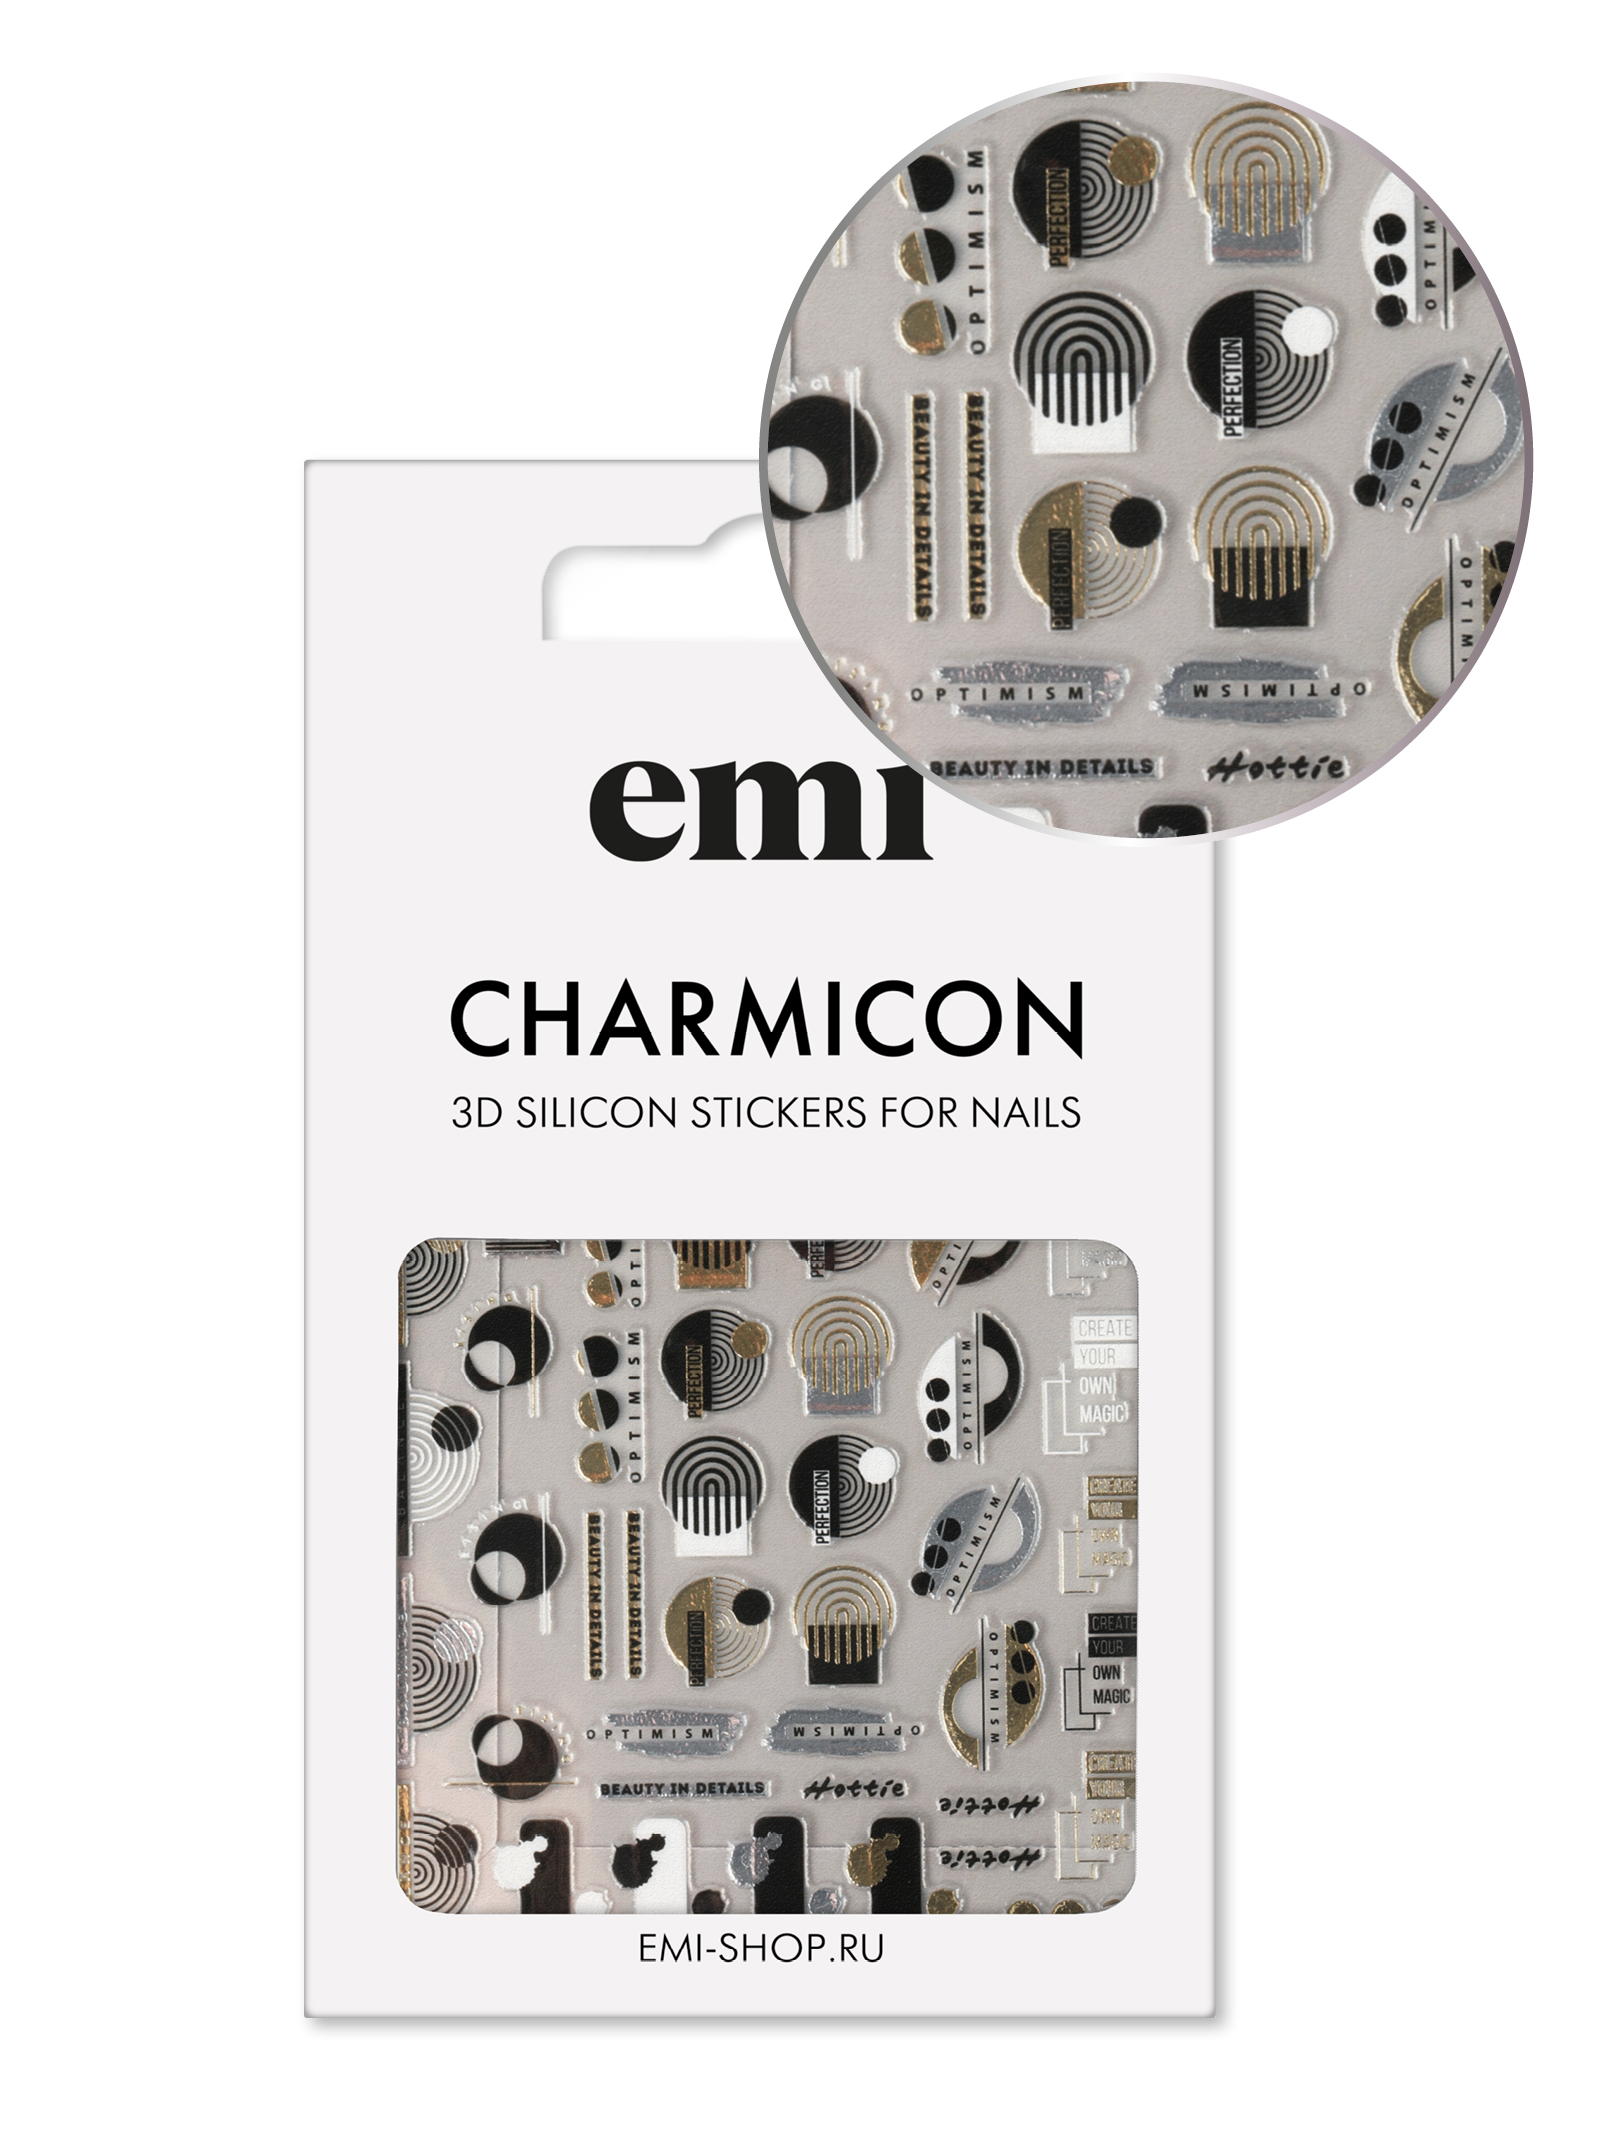 Наклейки для ногтей Emi Объемные Charmicon 3D Silicone Stickers 239 Баланс объемные наклейки для ногтей emi charmicon 3d silicone stickers 233 путешествия 2